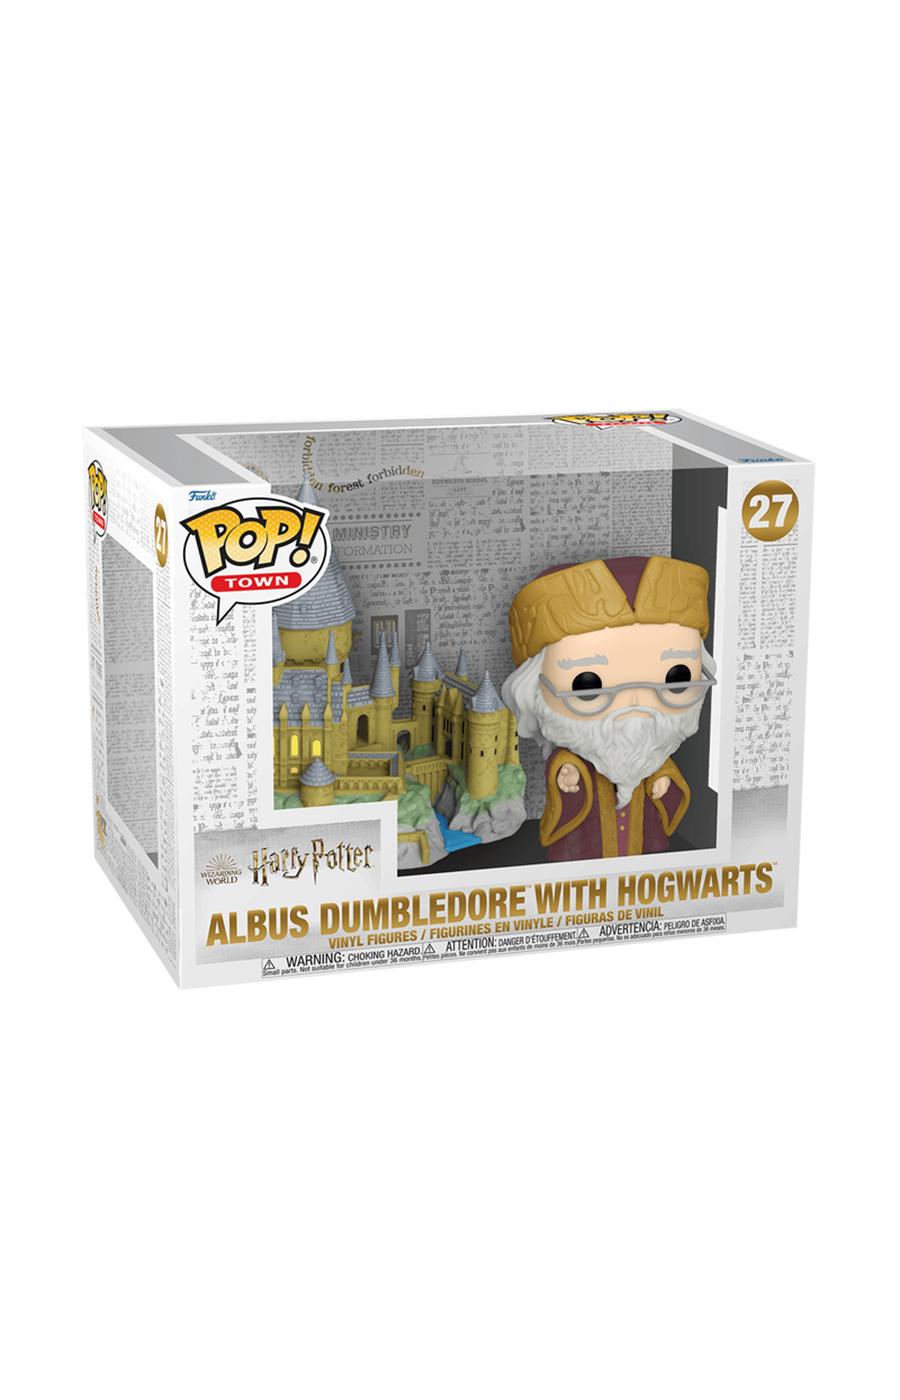 Funko Pop! Harry Potter Albus Dumbledore with Hogwarts Vinyl Figures; image 2 of 2